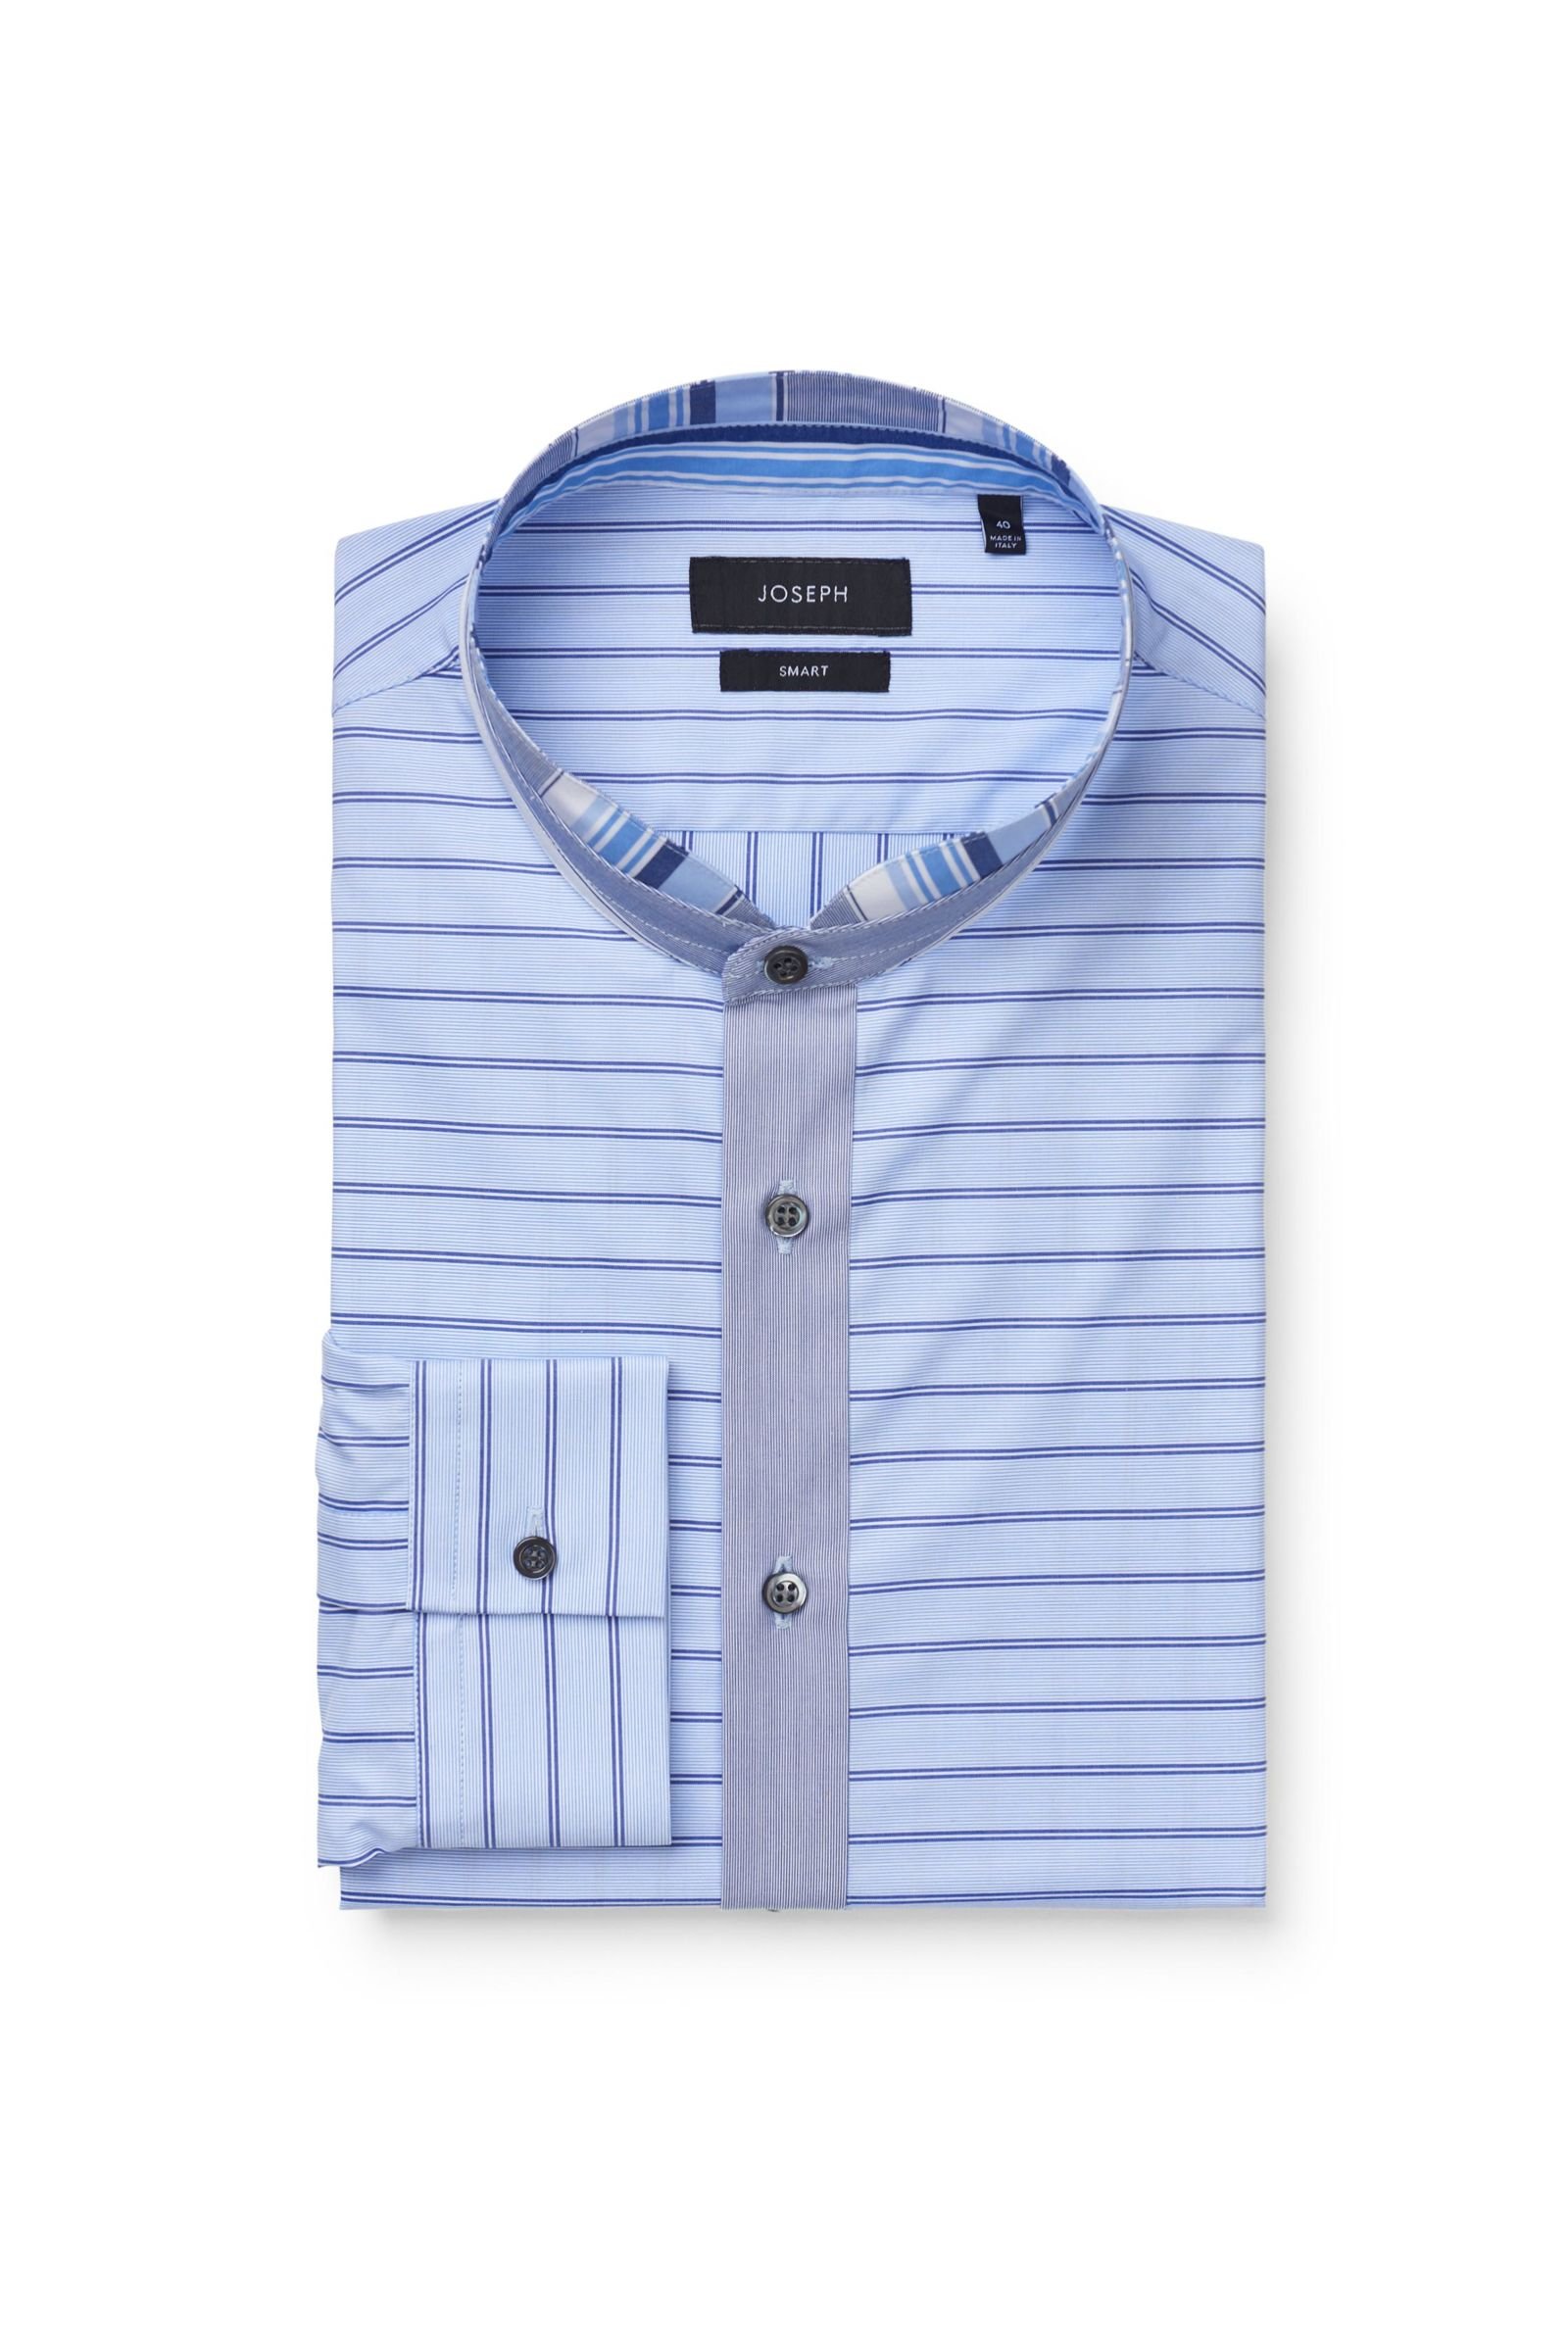 Casual shirt 'Mentone' grandad collar light blue striped